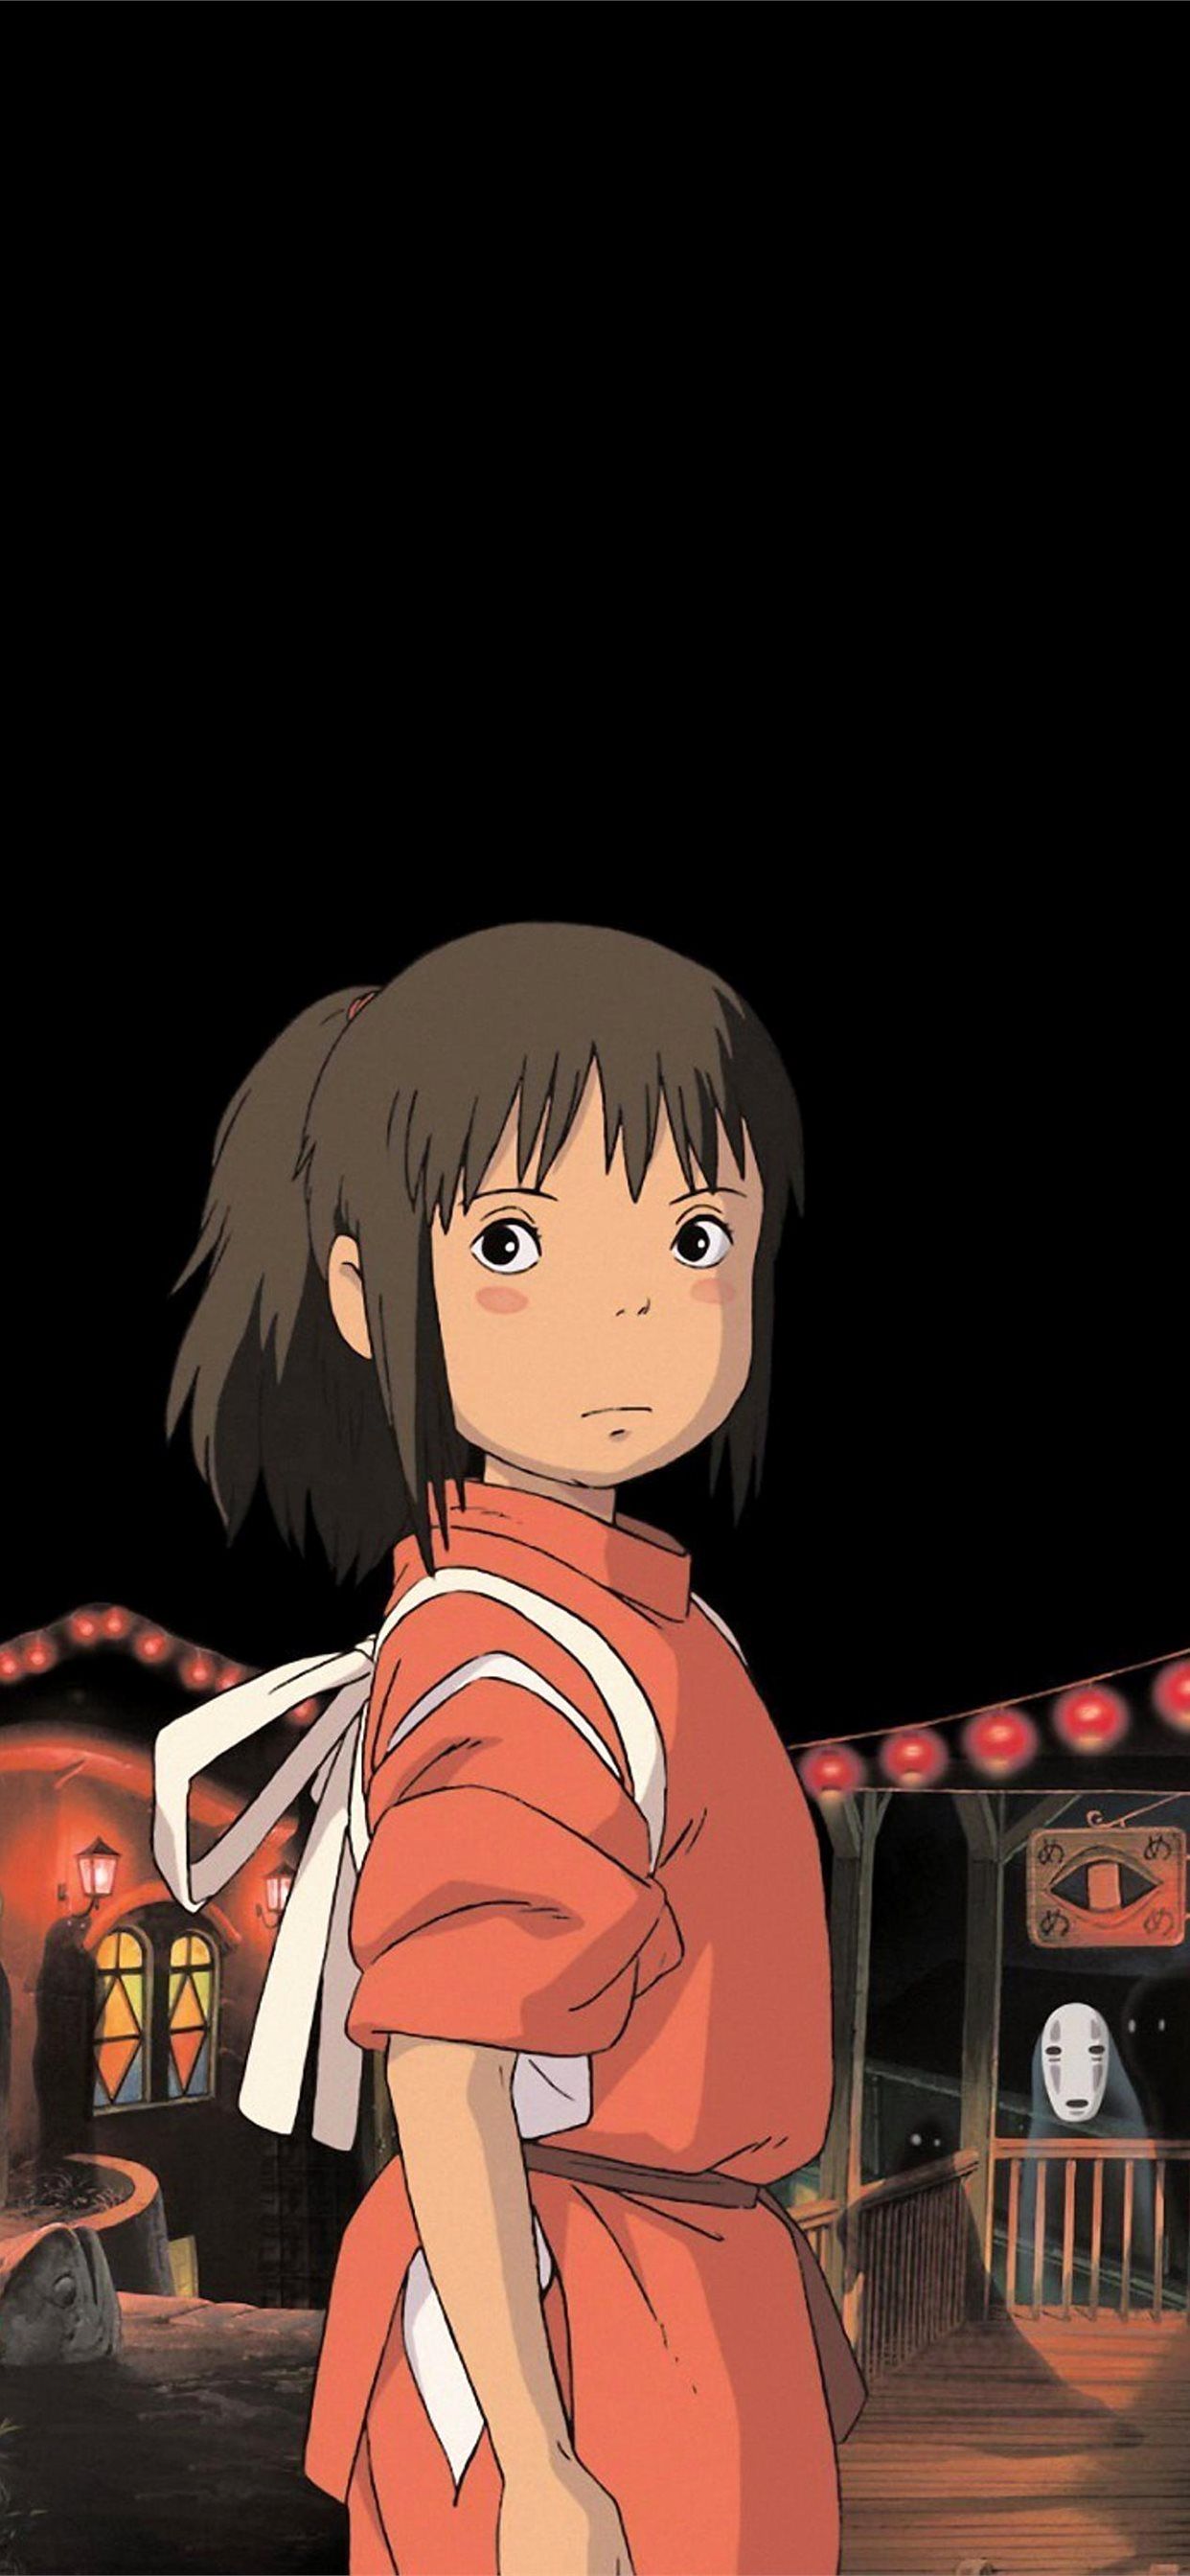 Spirited Away Phone New Studio Ghibli iPhone Wallpaper Free Download